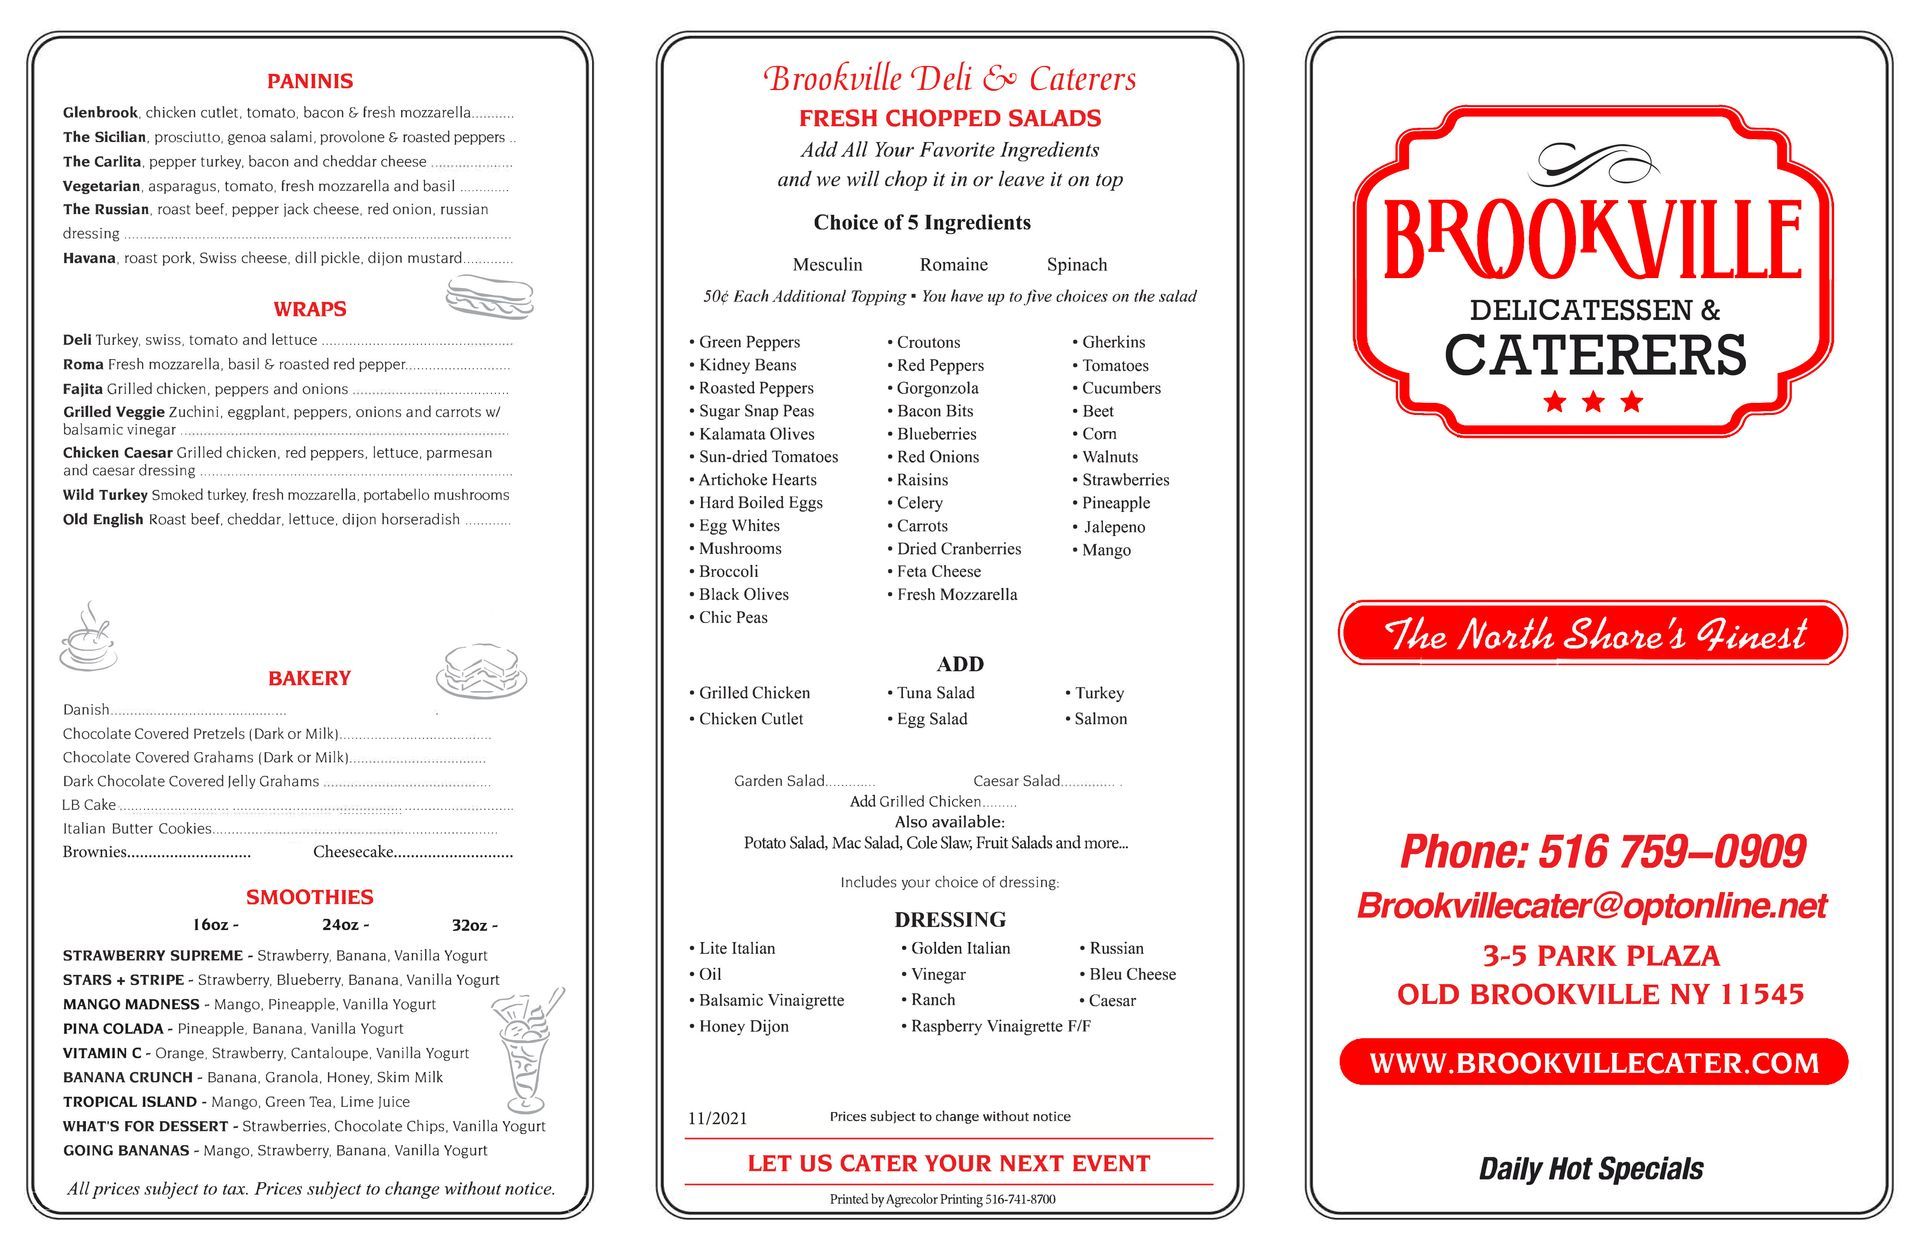 Brookville Deli & Caterers regular menu